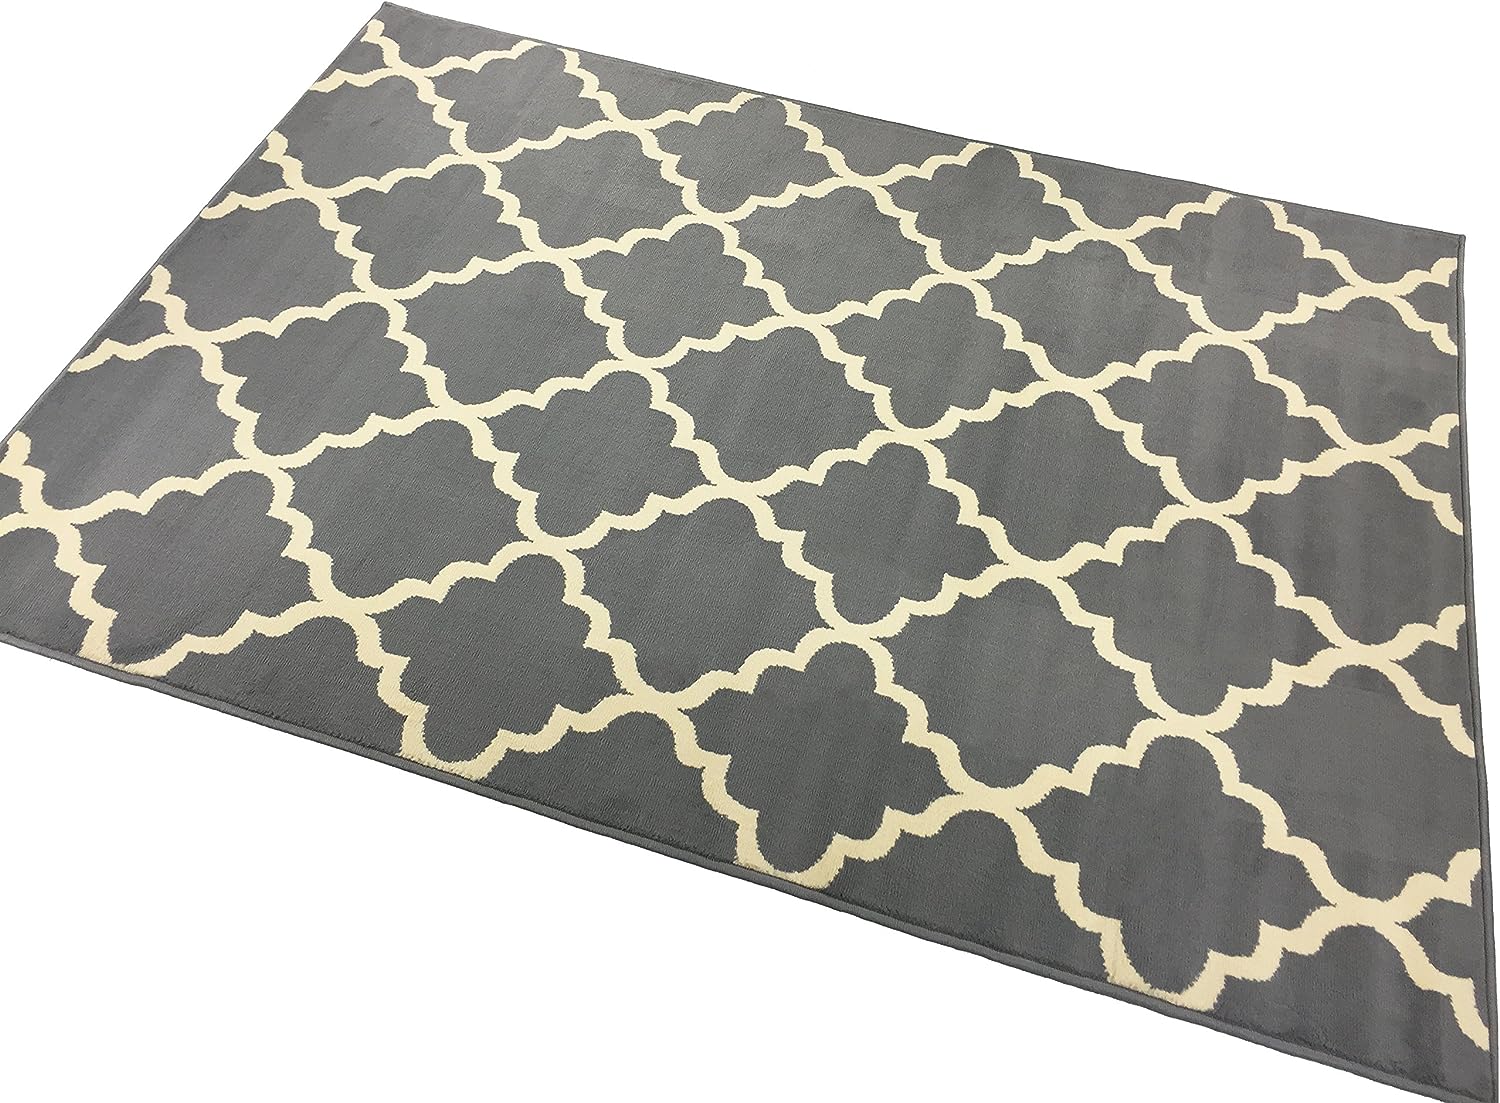 Trellis Contemporary Modern Lattice Design Area Rug (Dark Grey, 4'11" x 6'11")